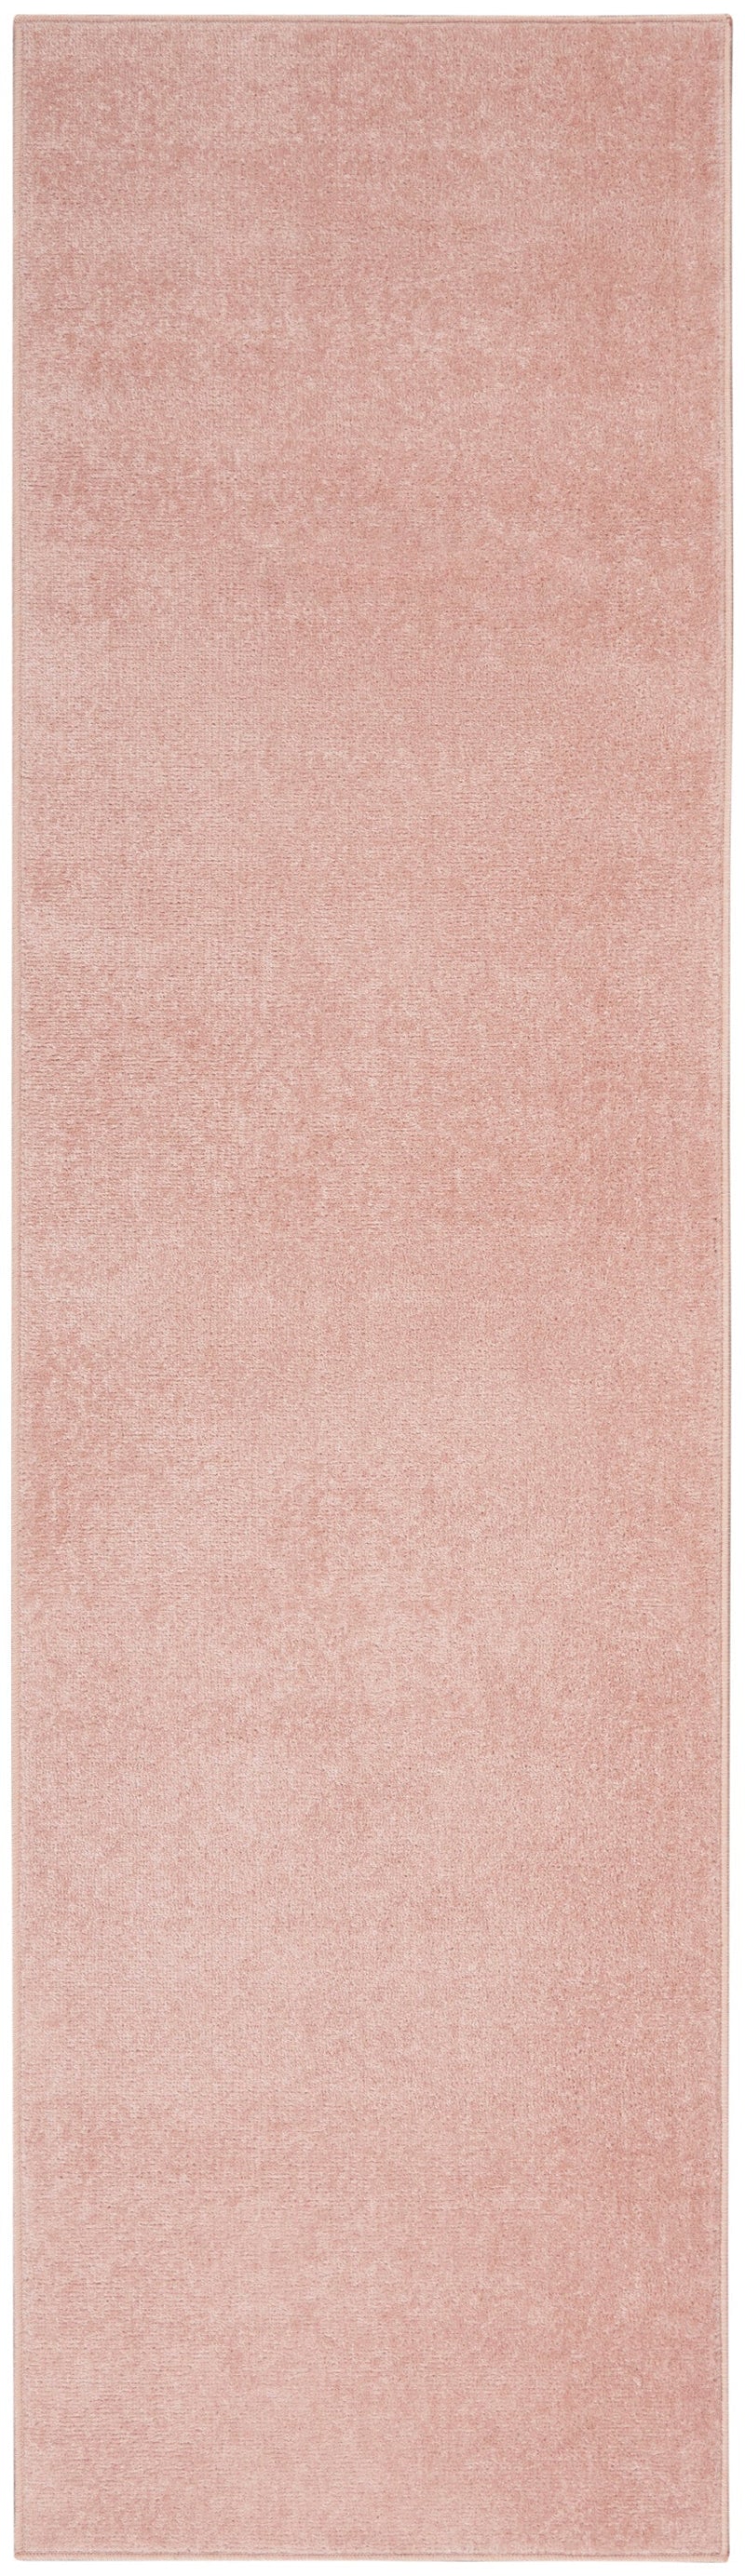 media image for nourison essentials pink rug by nourison 99446824776 redo 4 248